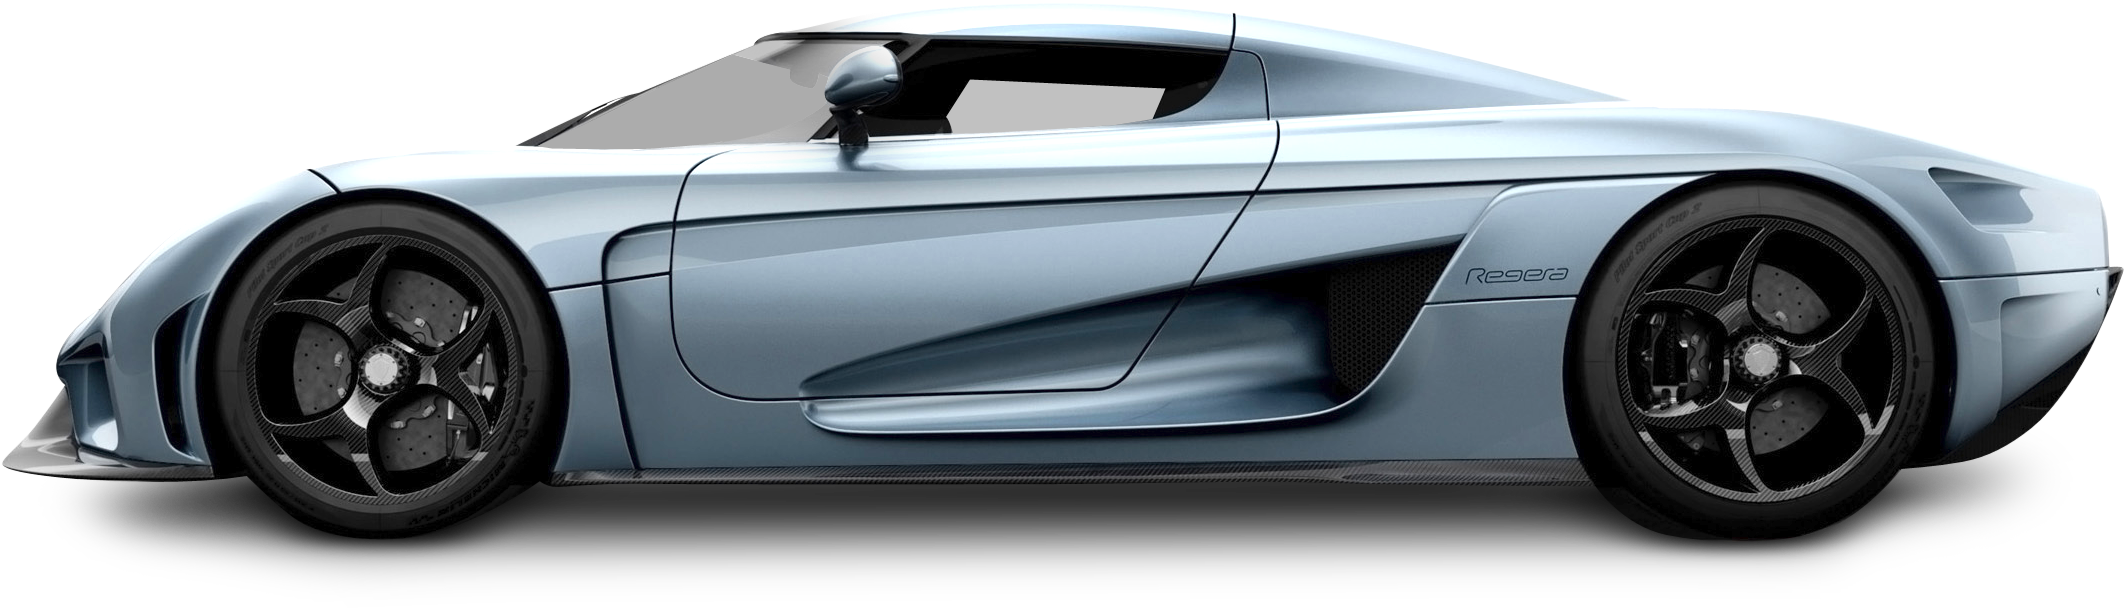 Koenigsegg voiture PNG Image